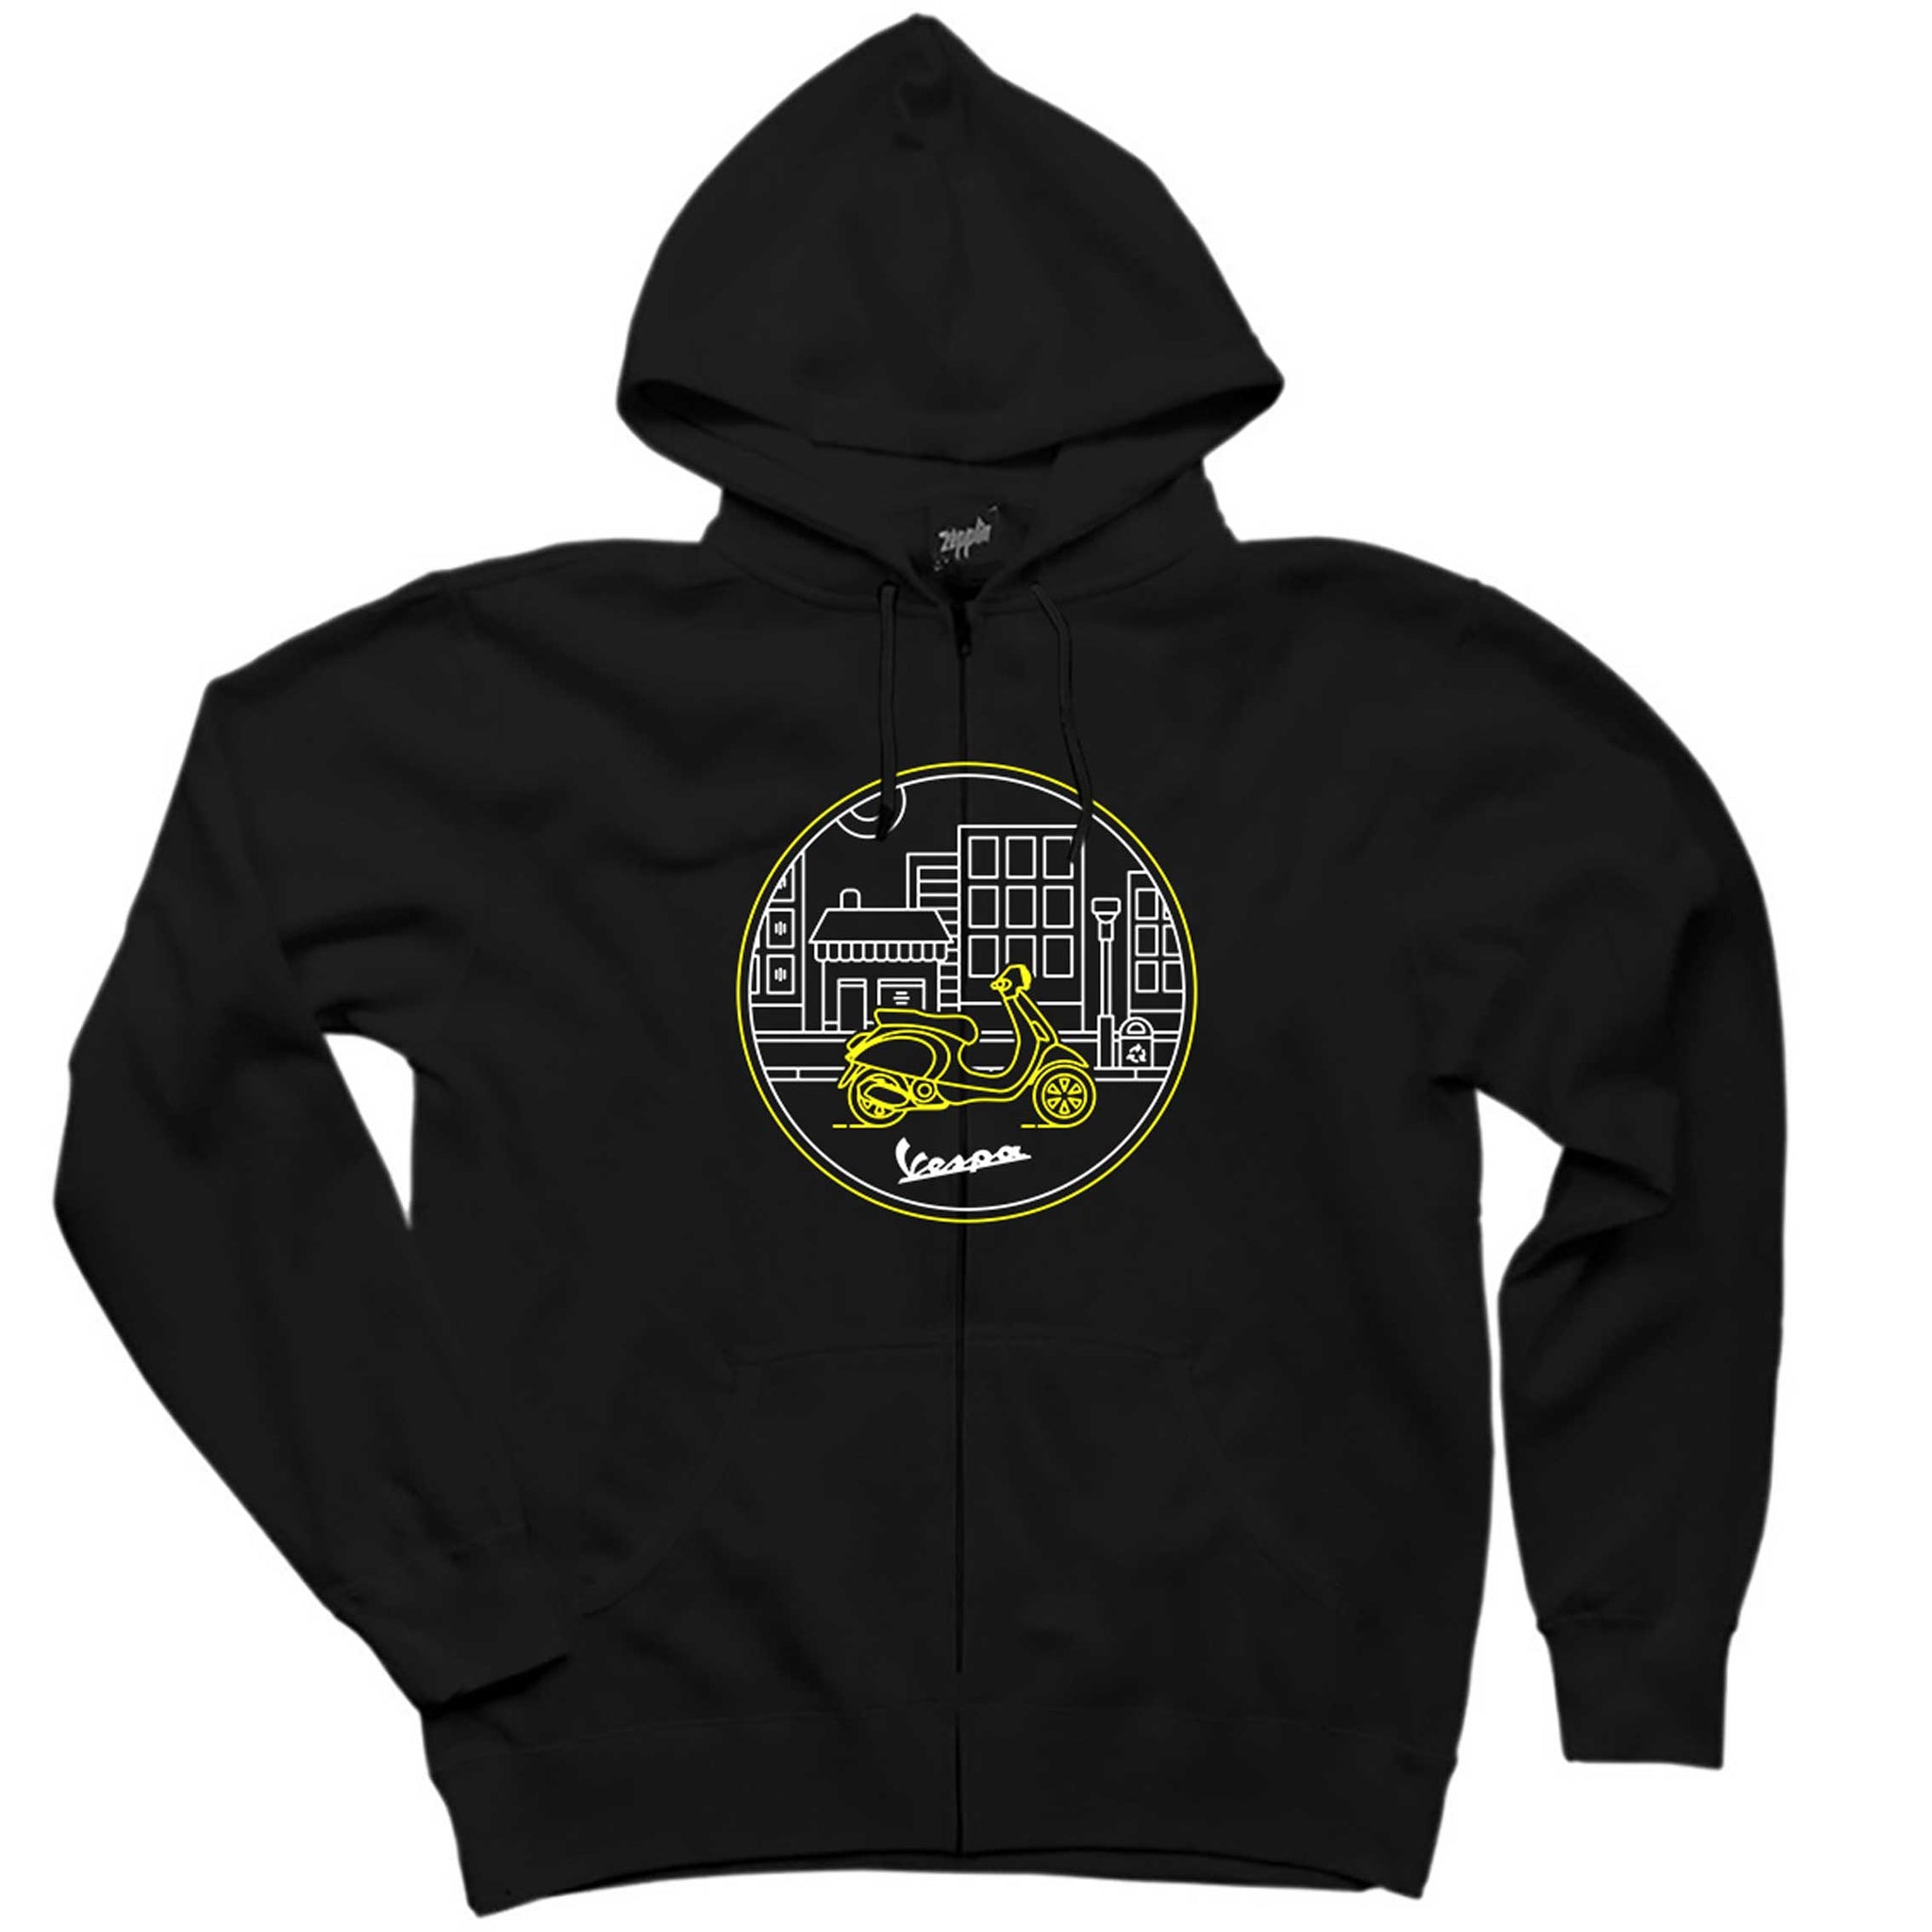 Vespa Tour at City Siyah Fermuarlı Kapşonlu Sweatshirt